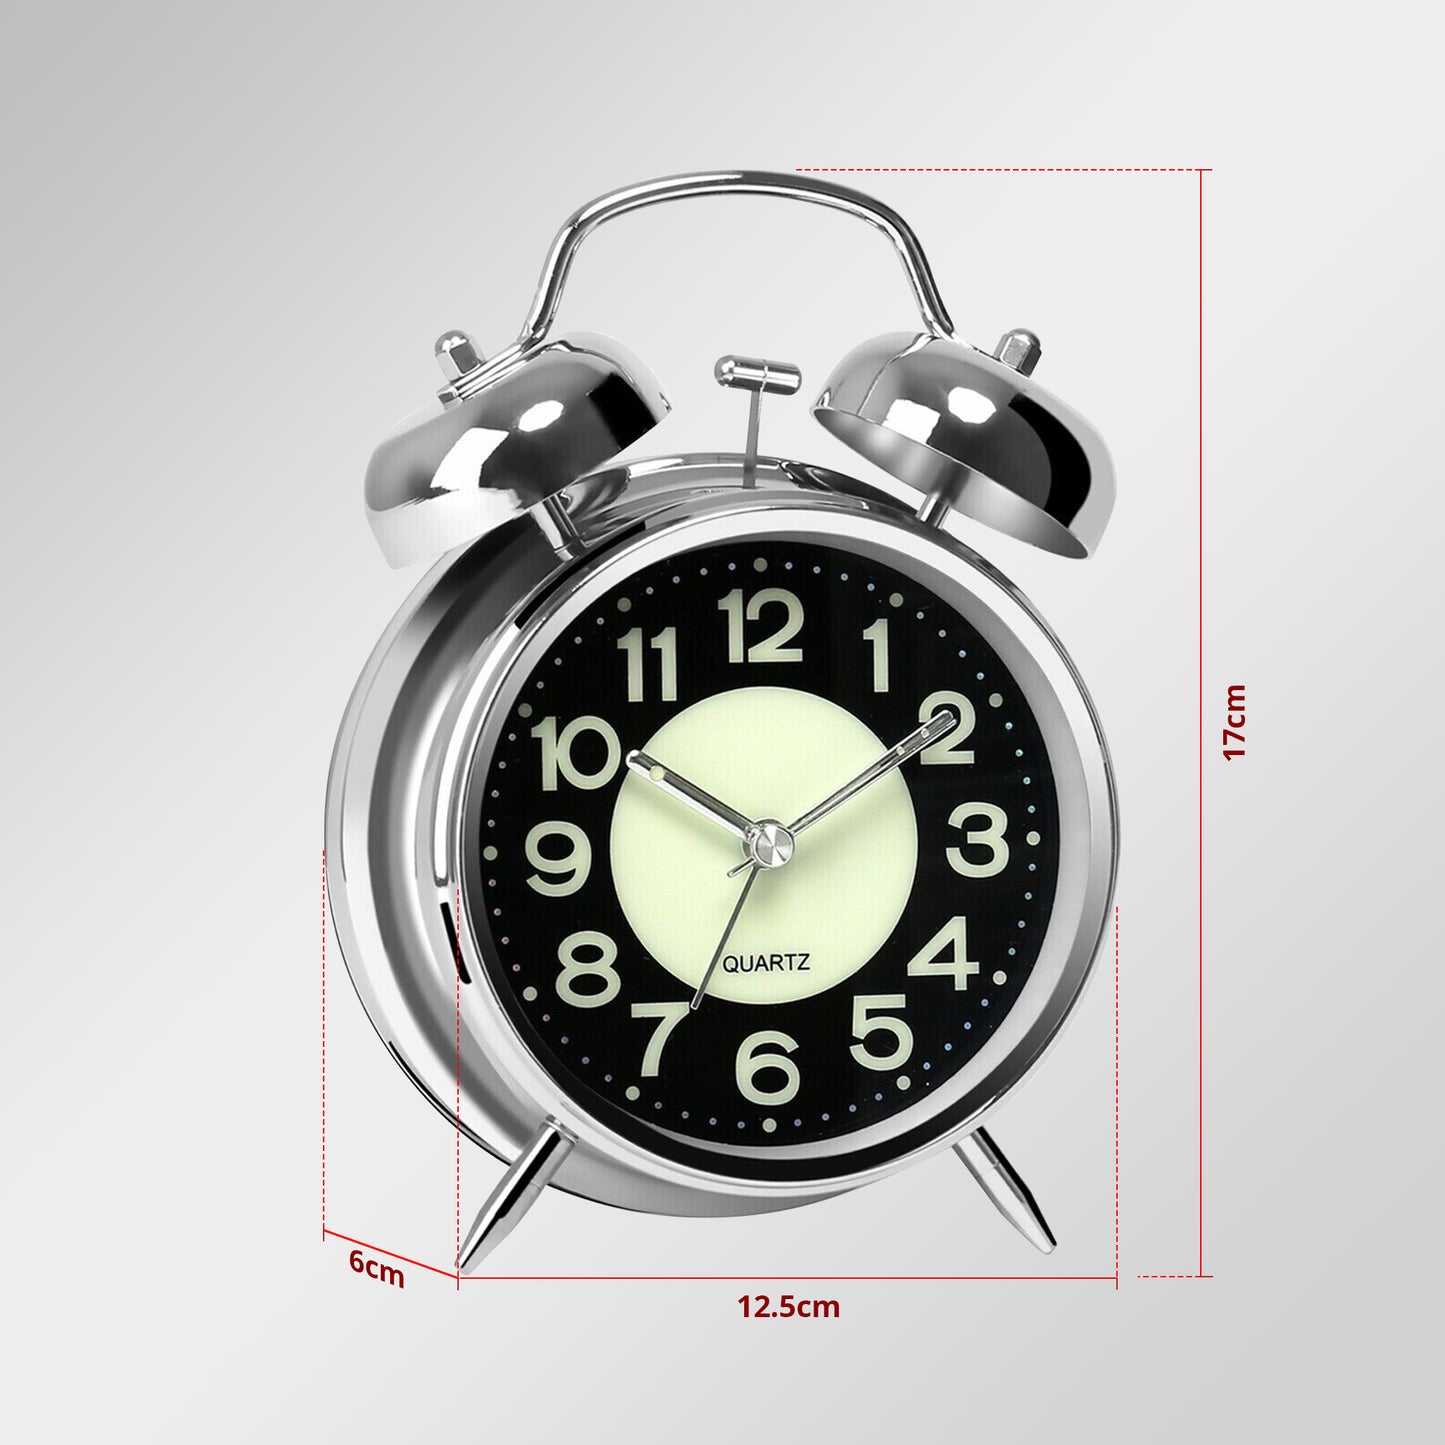 Alarm clock for heavy sleepers image